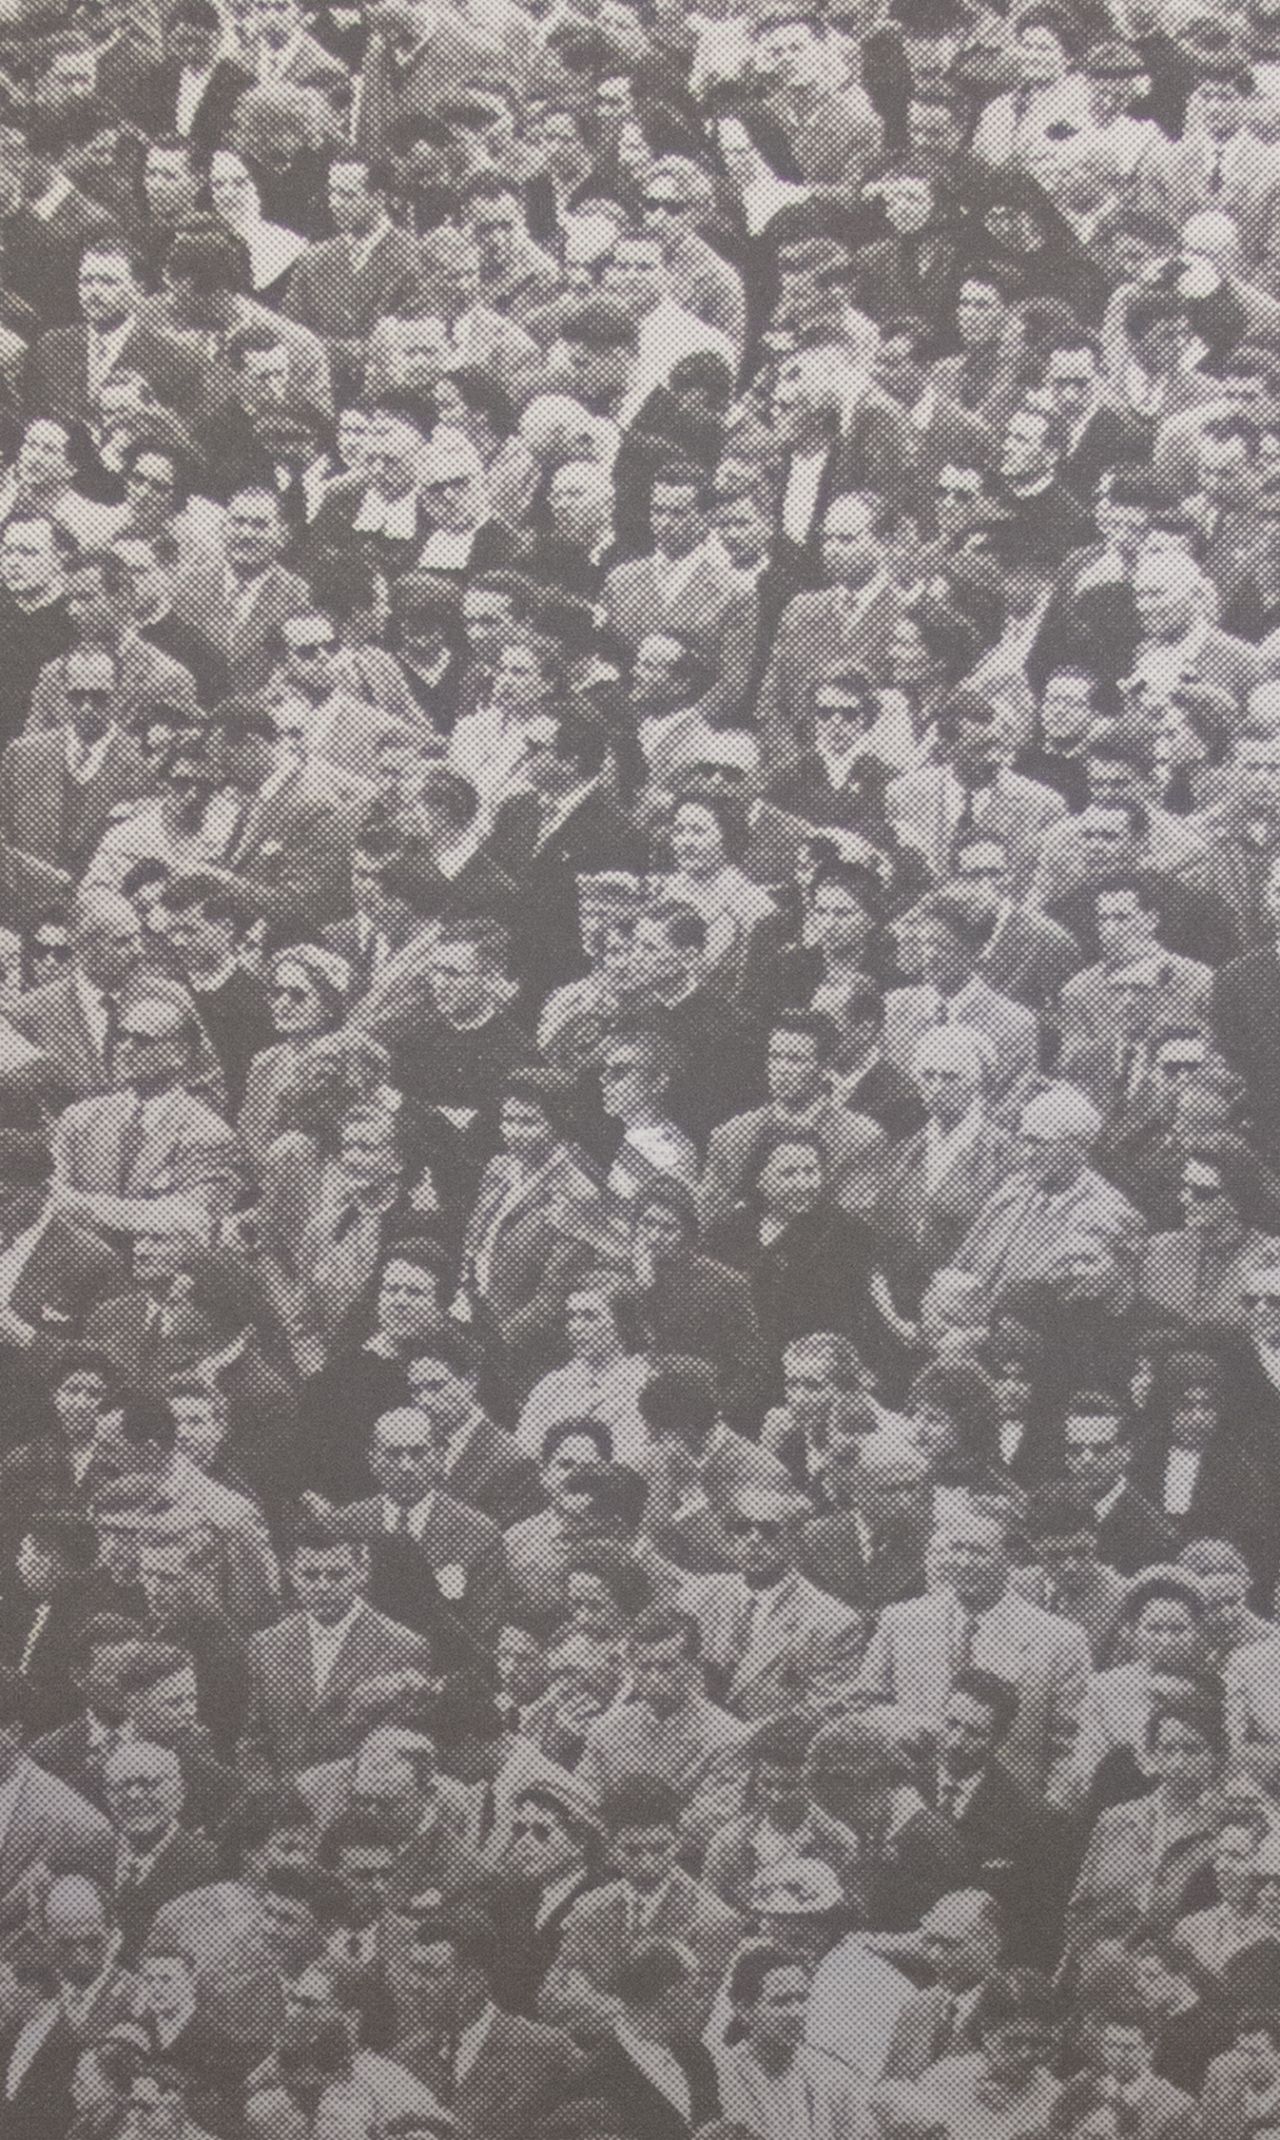 Crowd - Andy Warhol Crowd 1963 - HD Wallpaper 